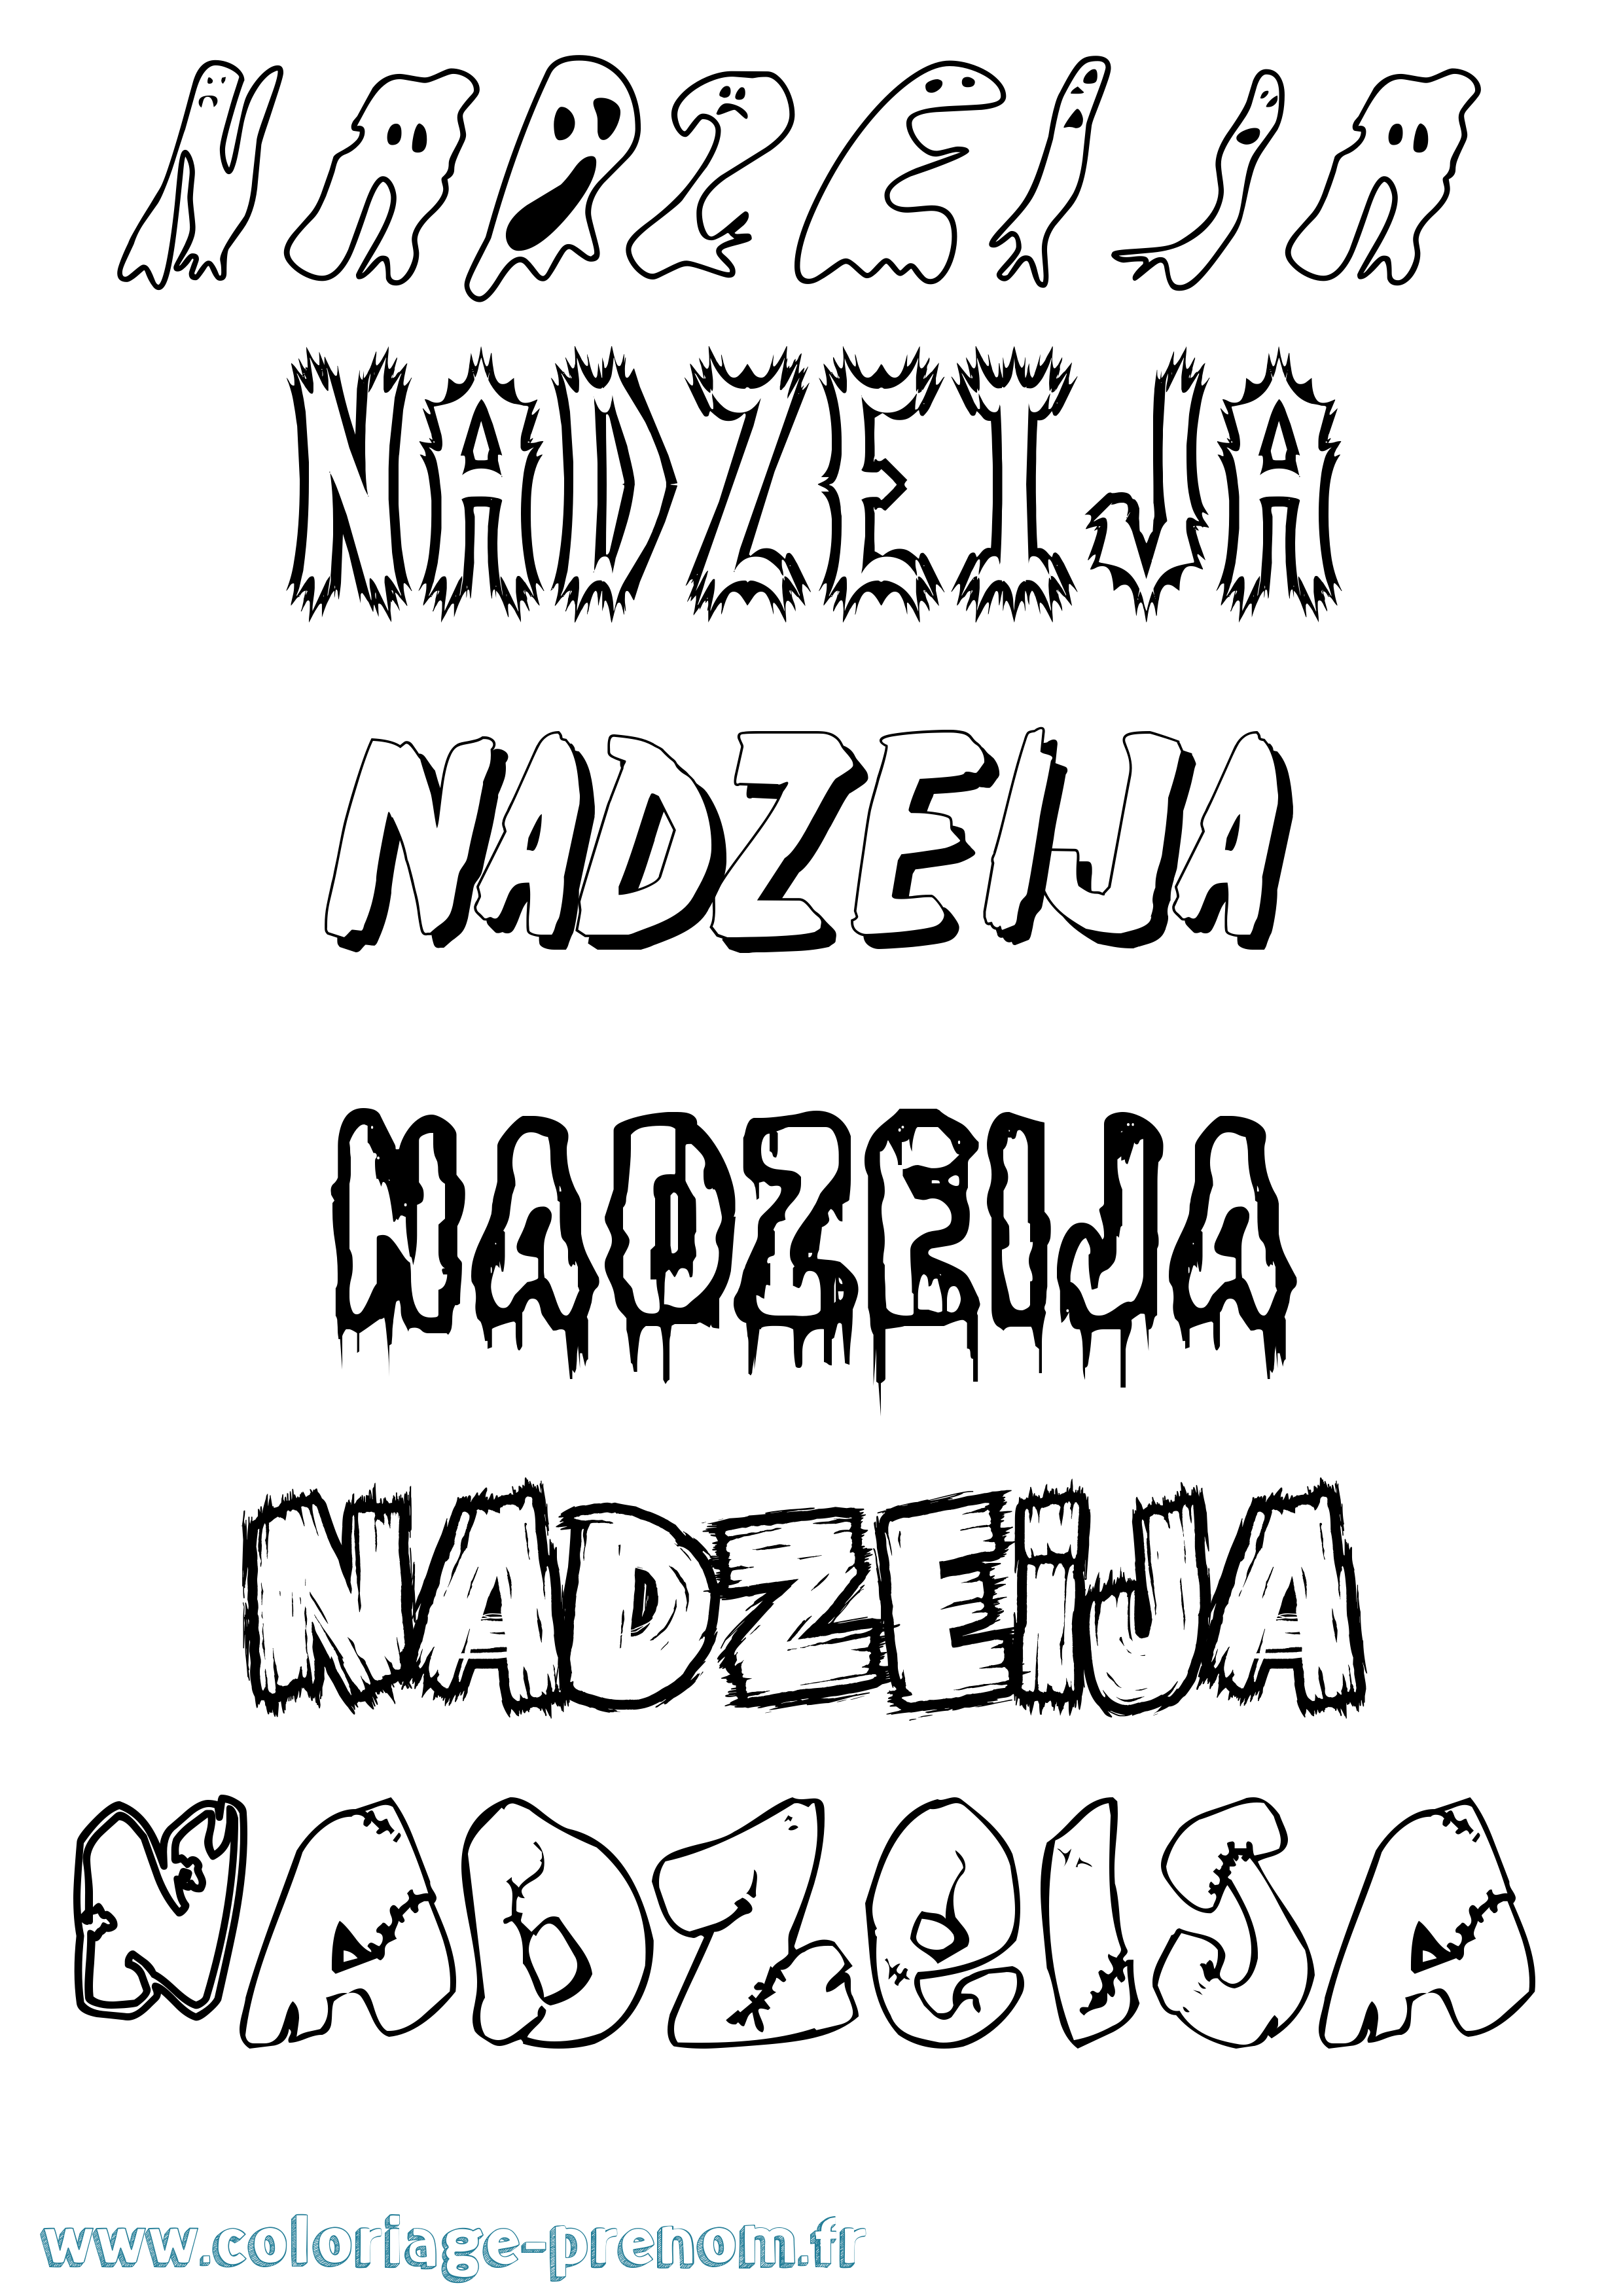 Coloriage prénom Nadzeija Frisson